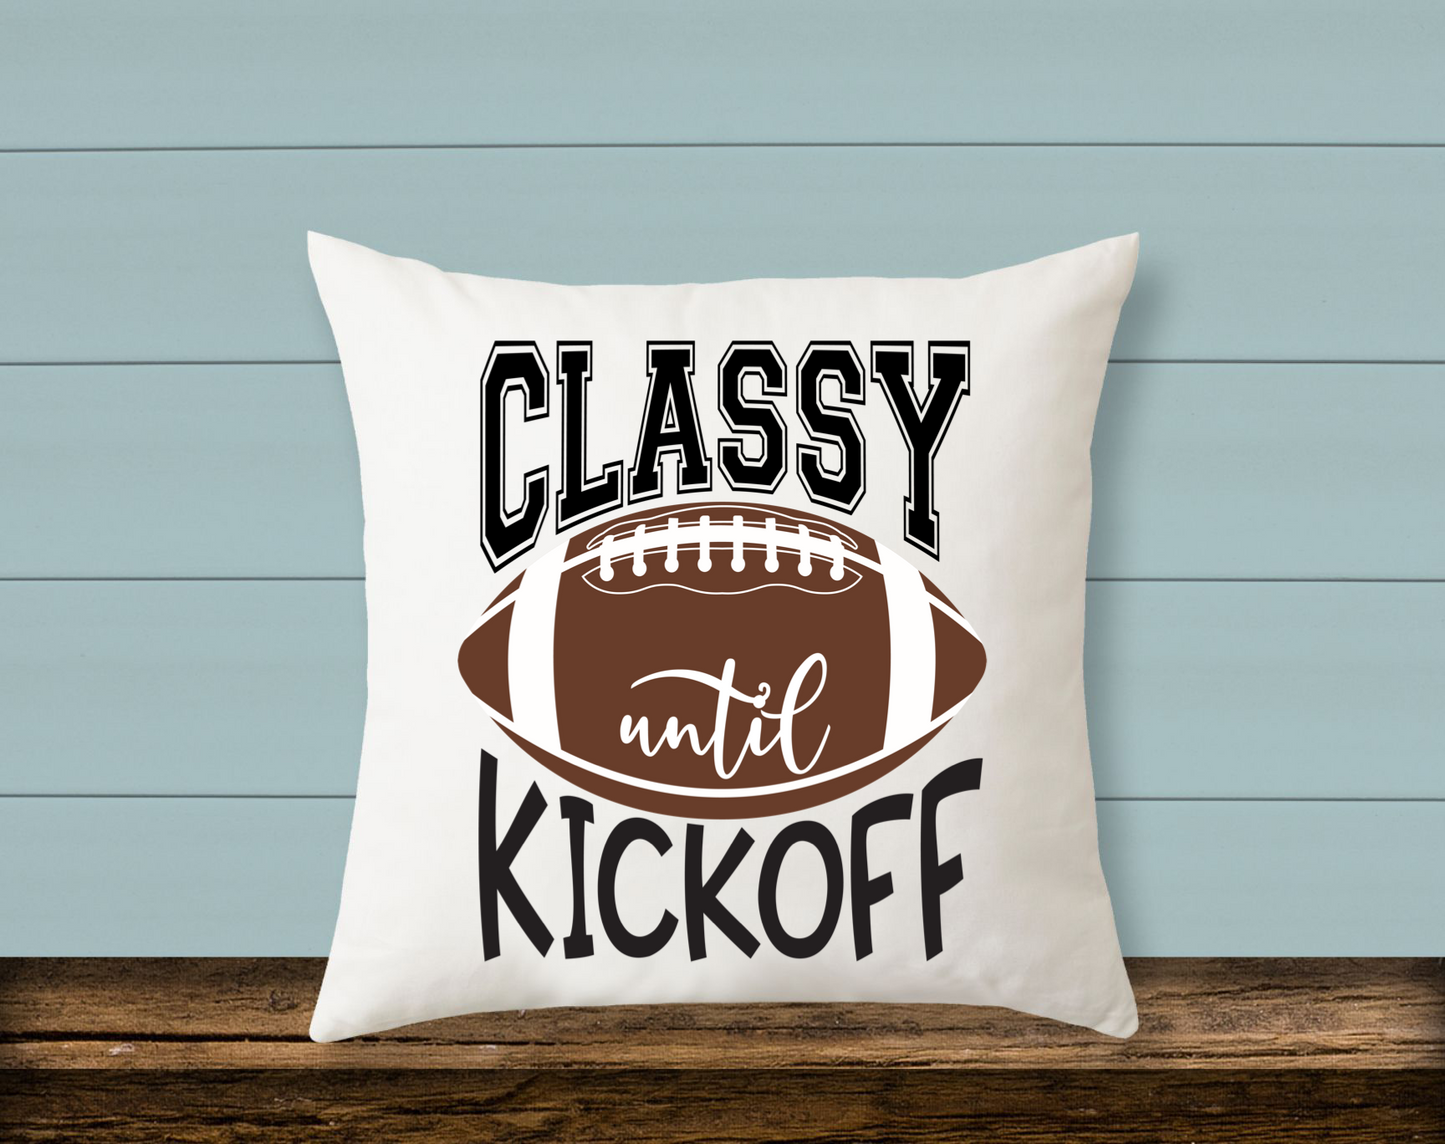 Football Pillows